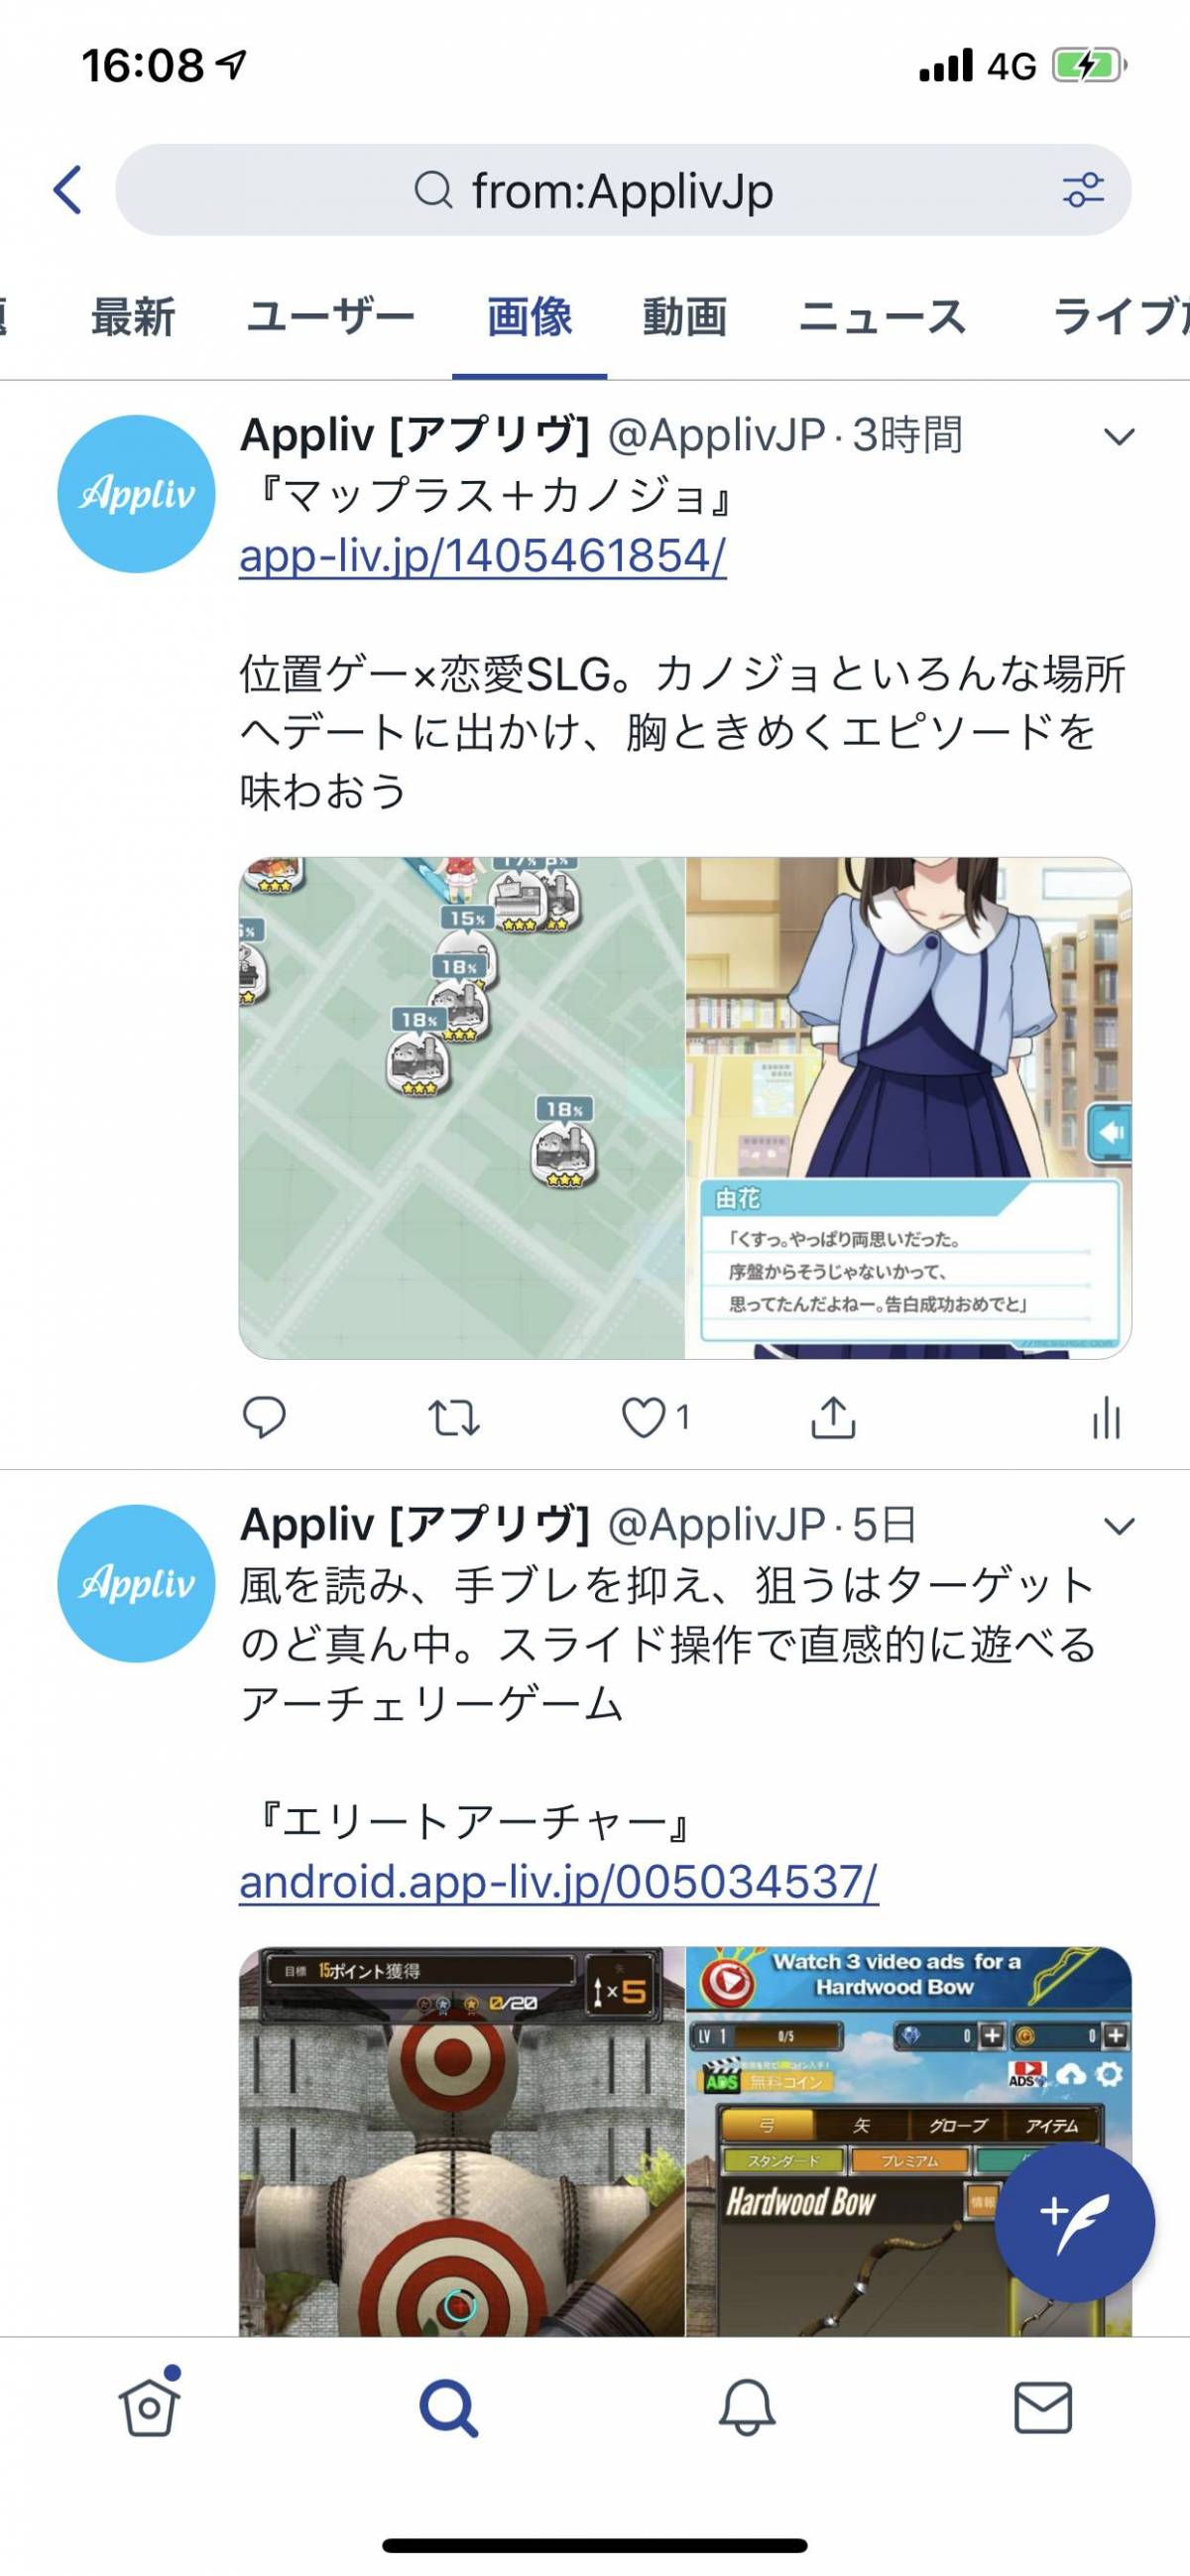 Twitter 画像検索 のやり方 日付指定など便利テクも Iphone Android Pc の画像 9枚目 Appliv Topics